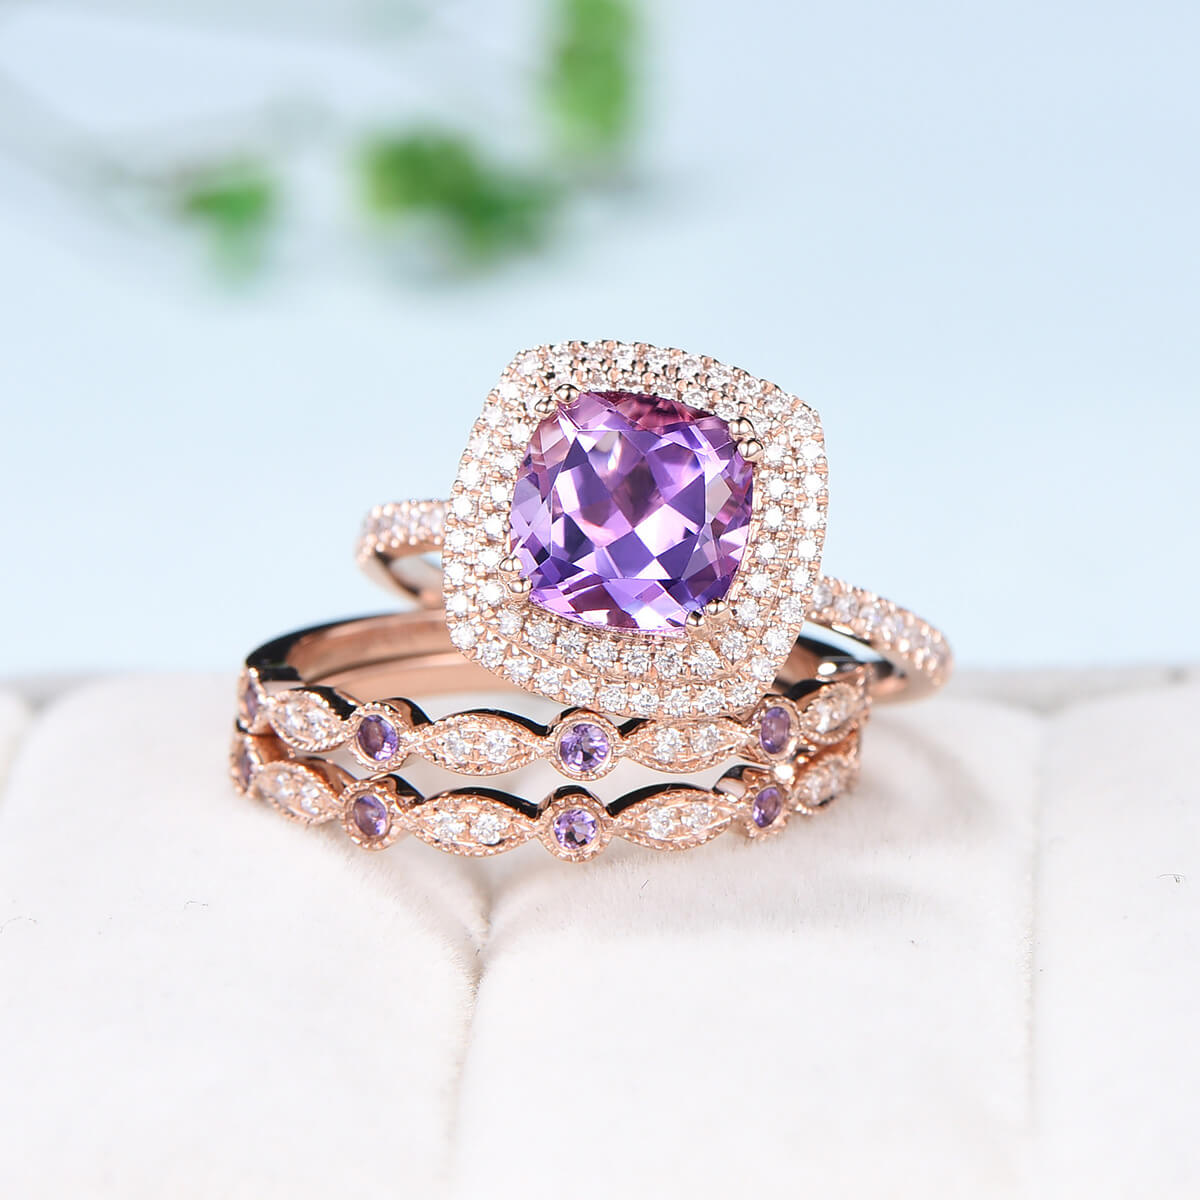 Cushion Amethyst diamond wedding ring set rose gold vintage antique engagement ring set double halo bridal set for women anniversary gift - PENFINE